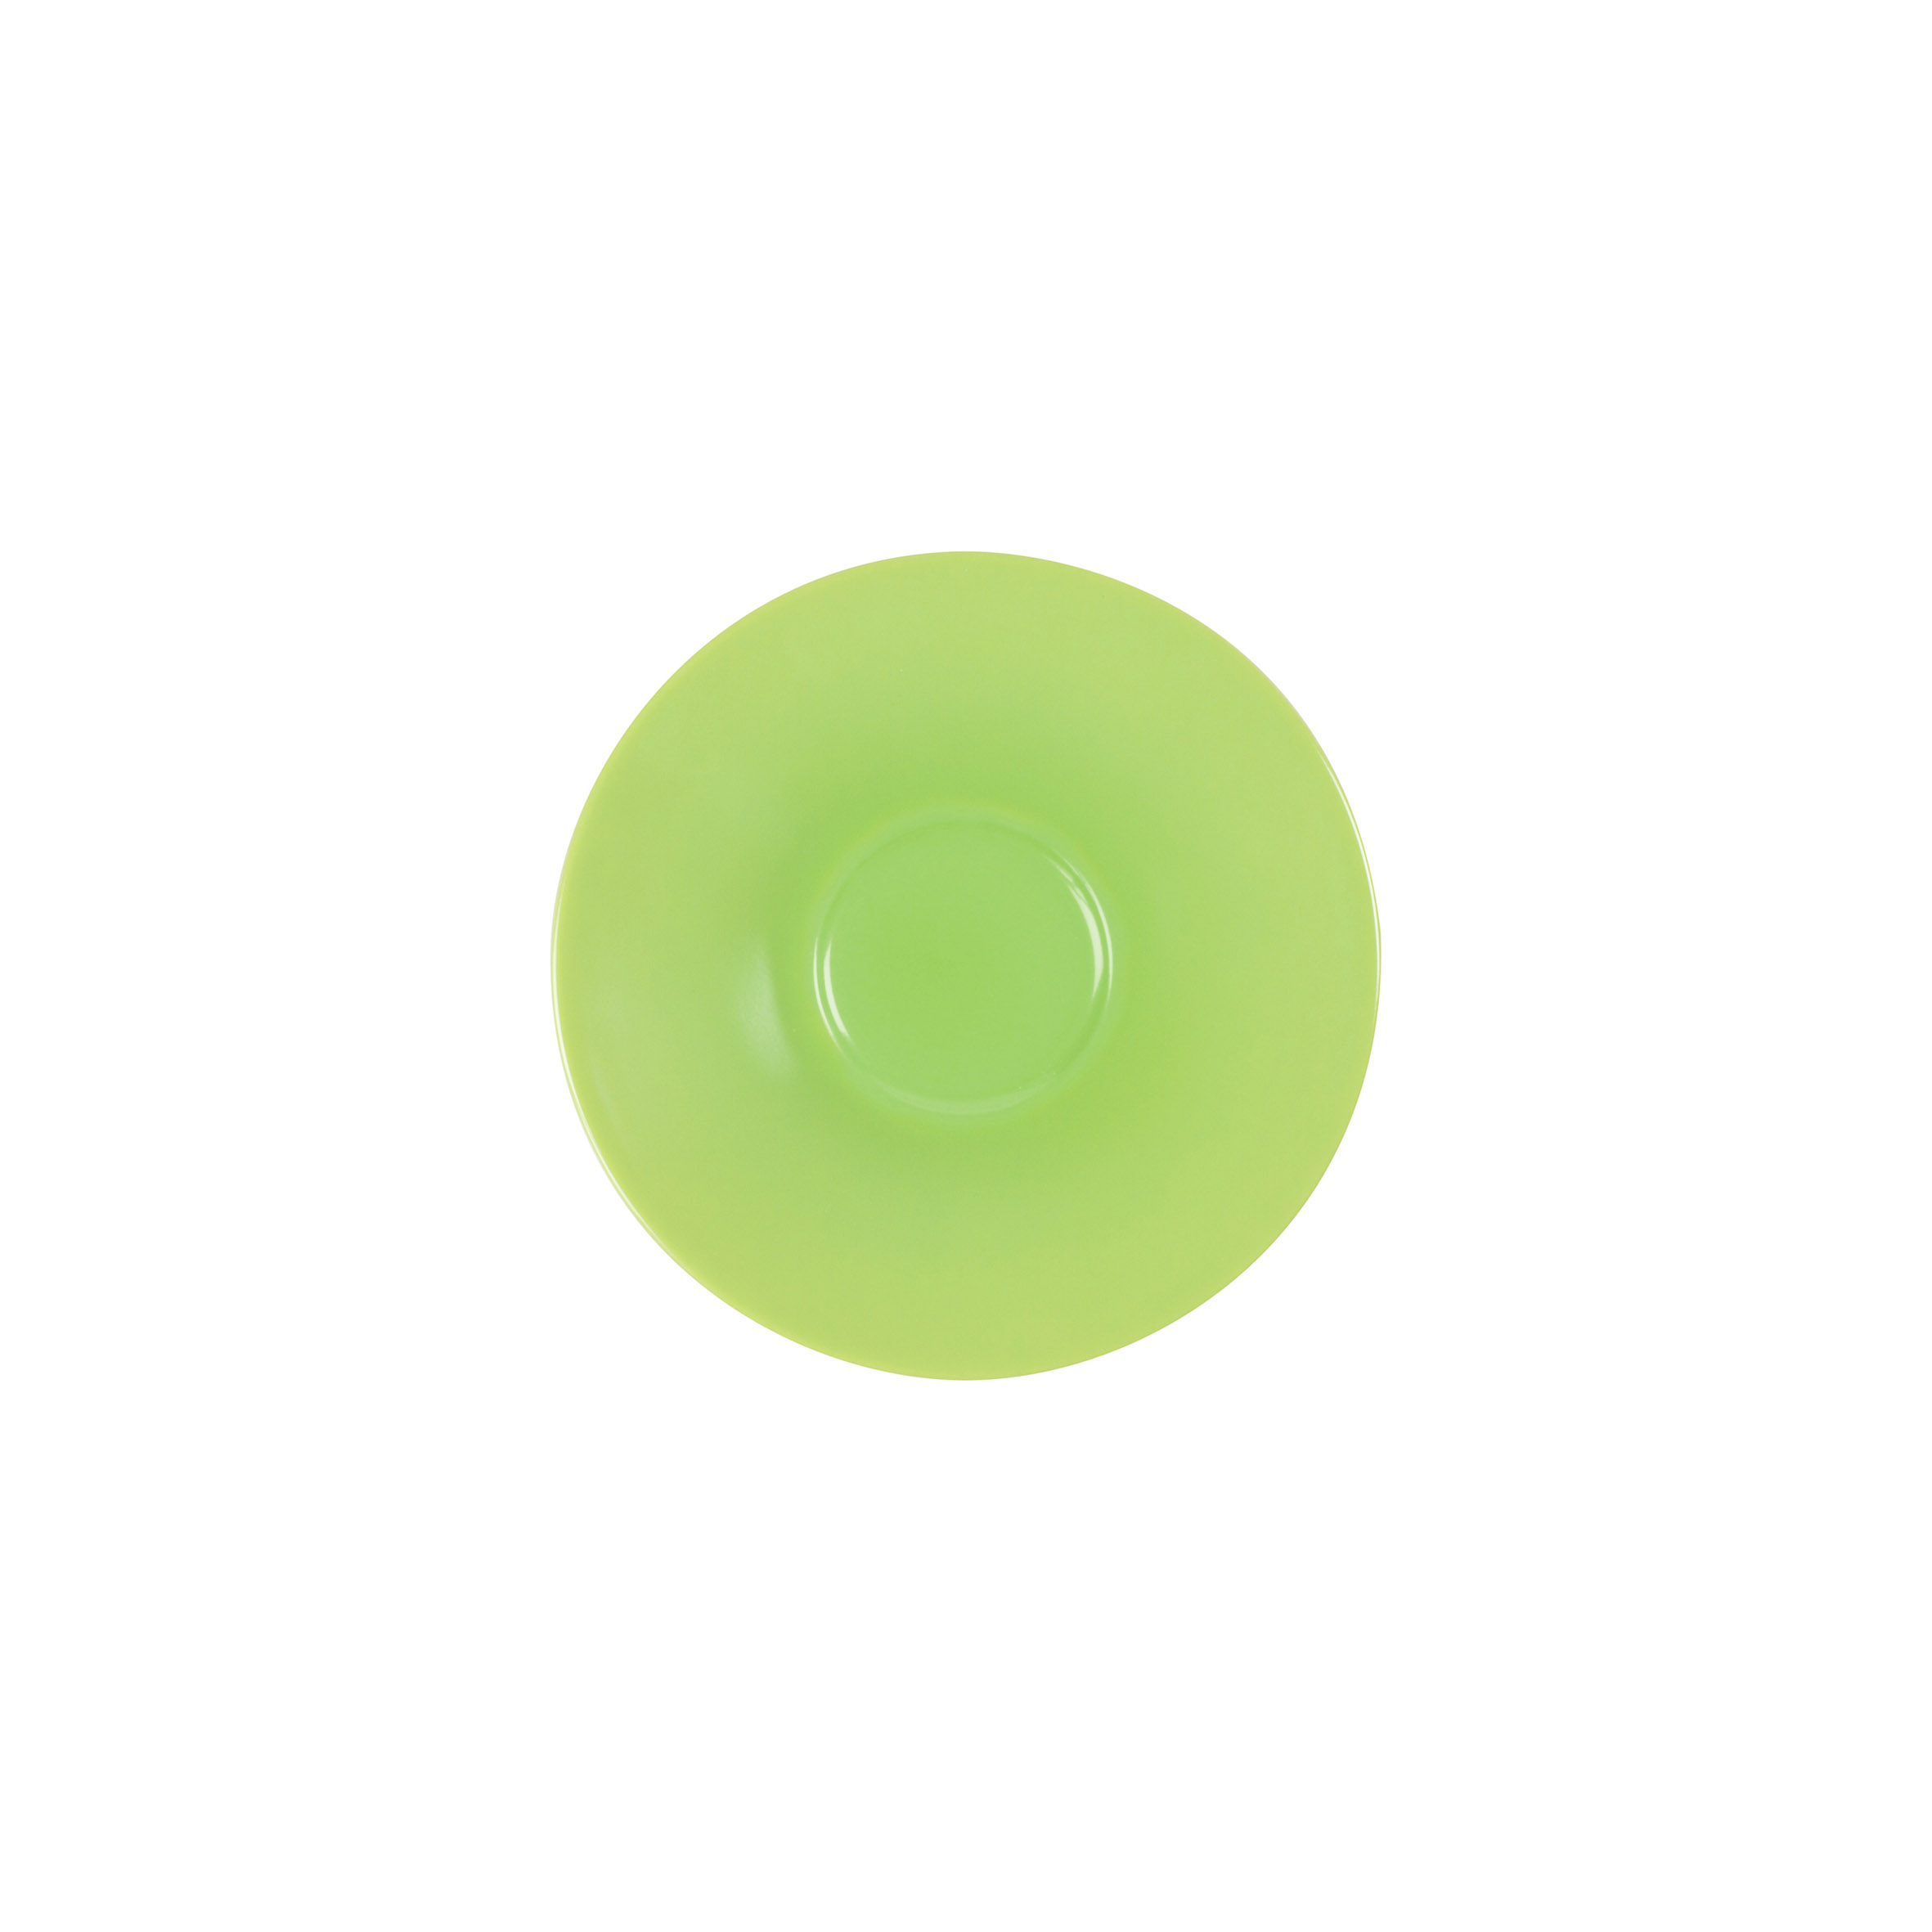 Kombi-Untertasse 16 cm, Farbe: light green / hellgrün,